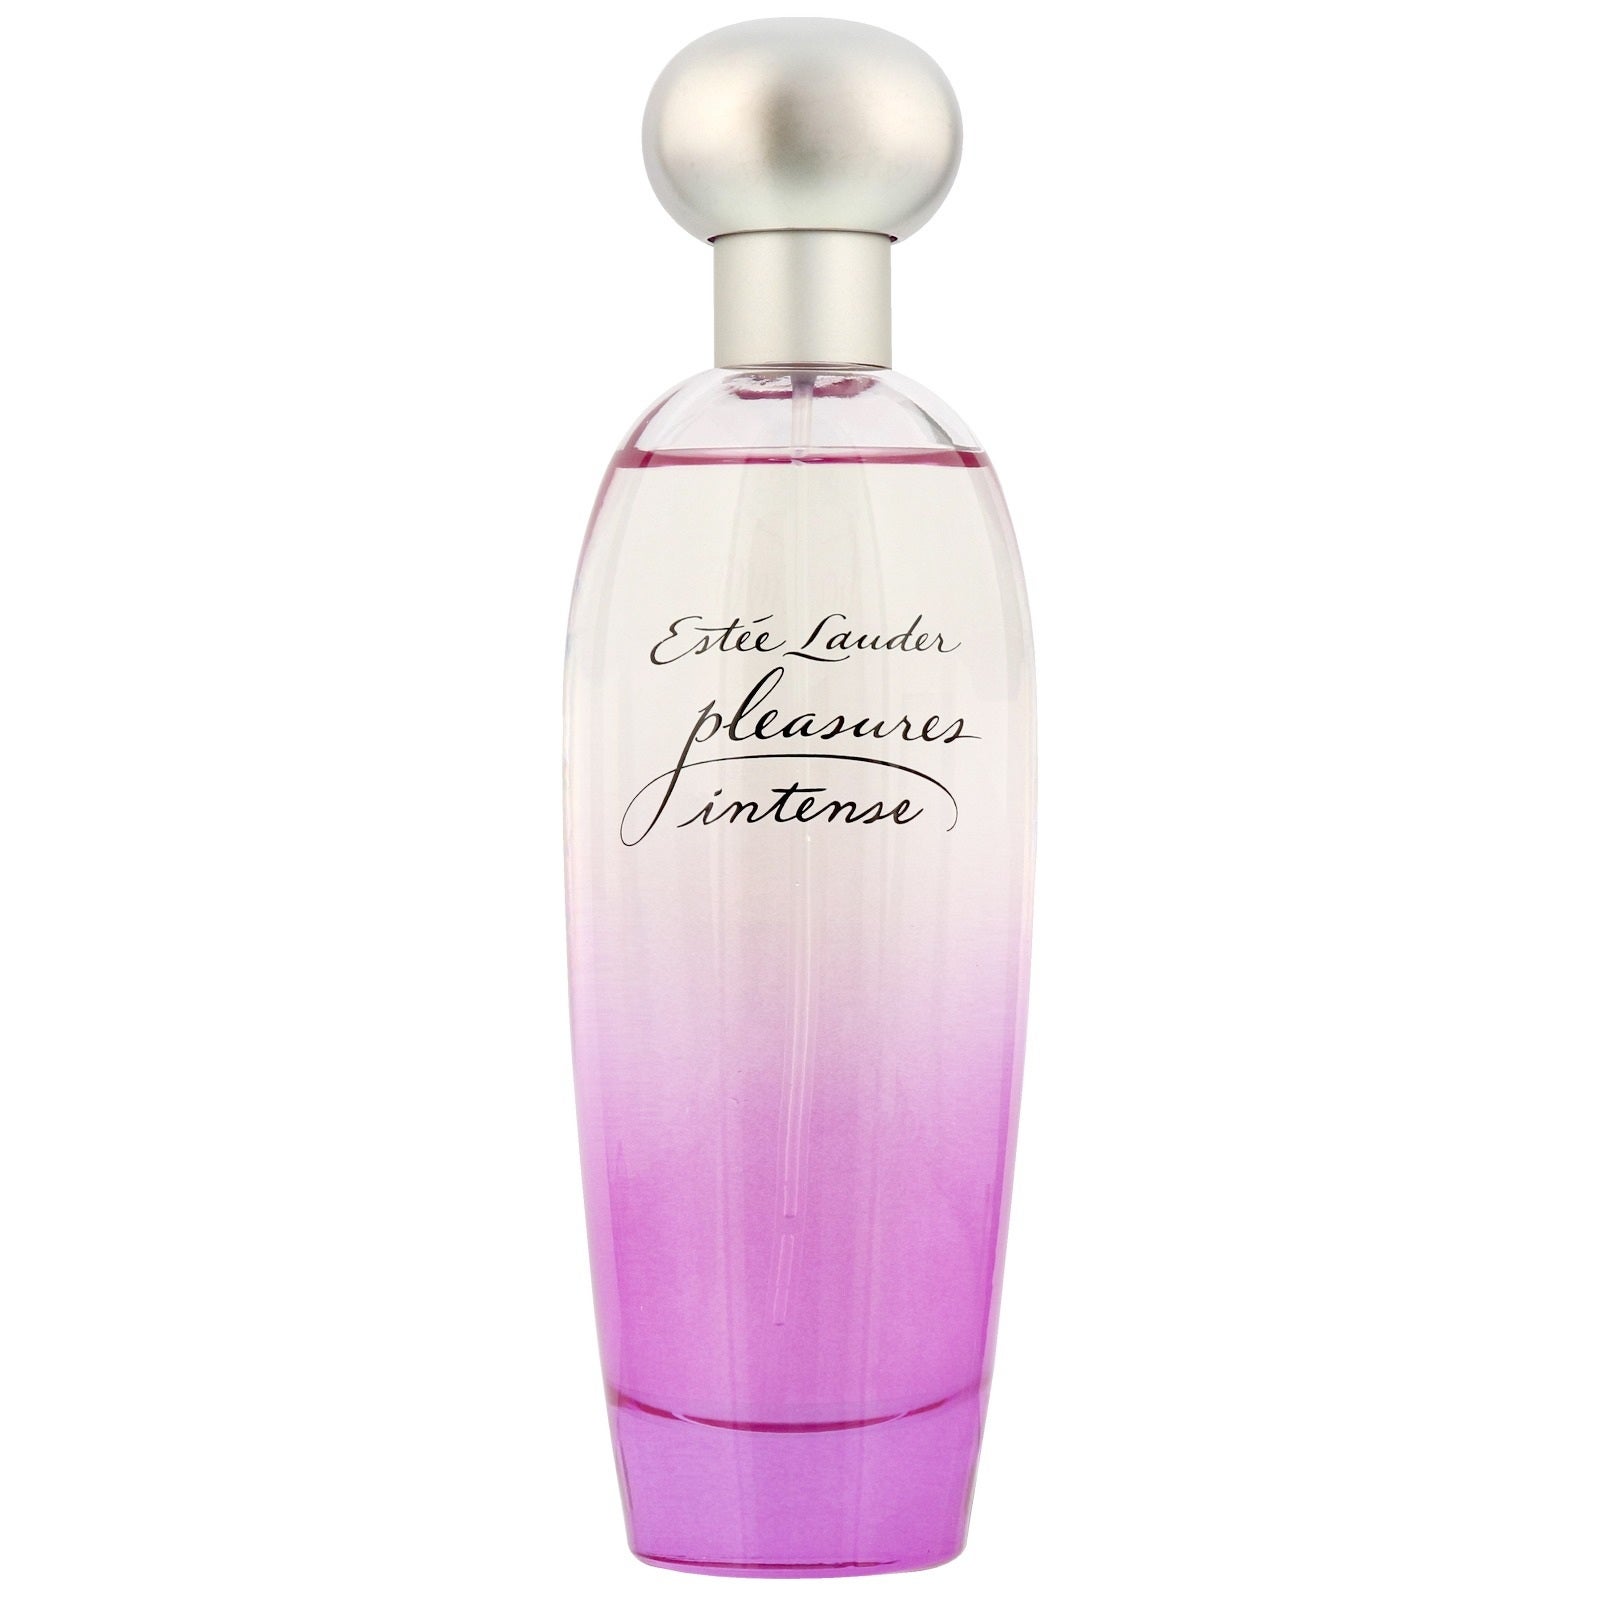 Estee Lauder Pleasures Intense Women's Perfume